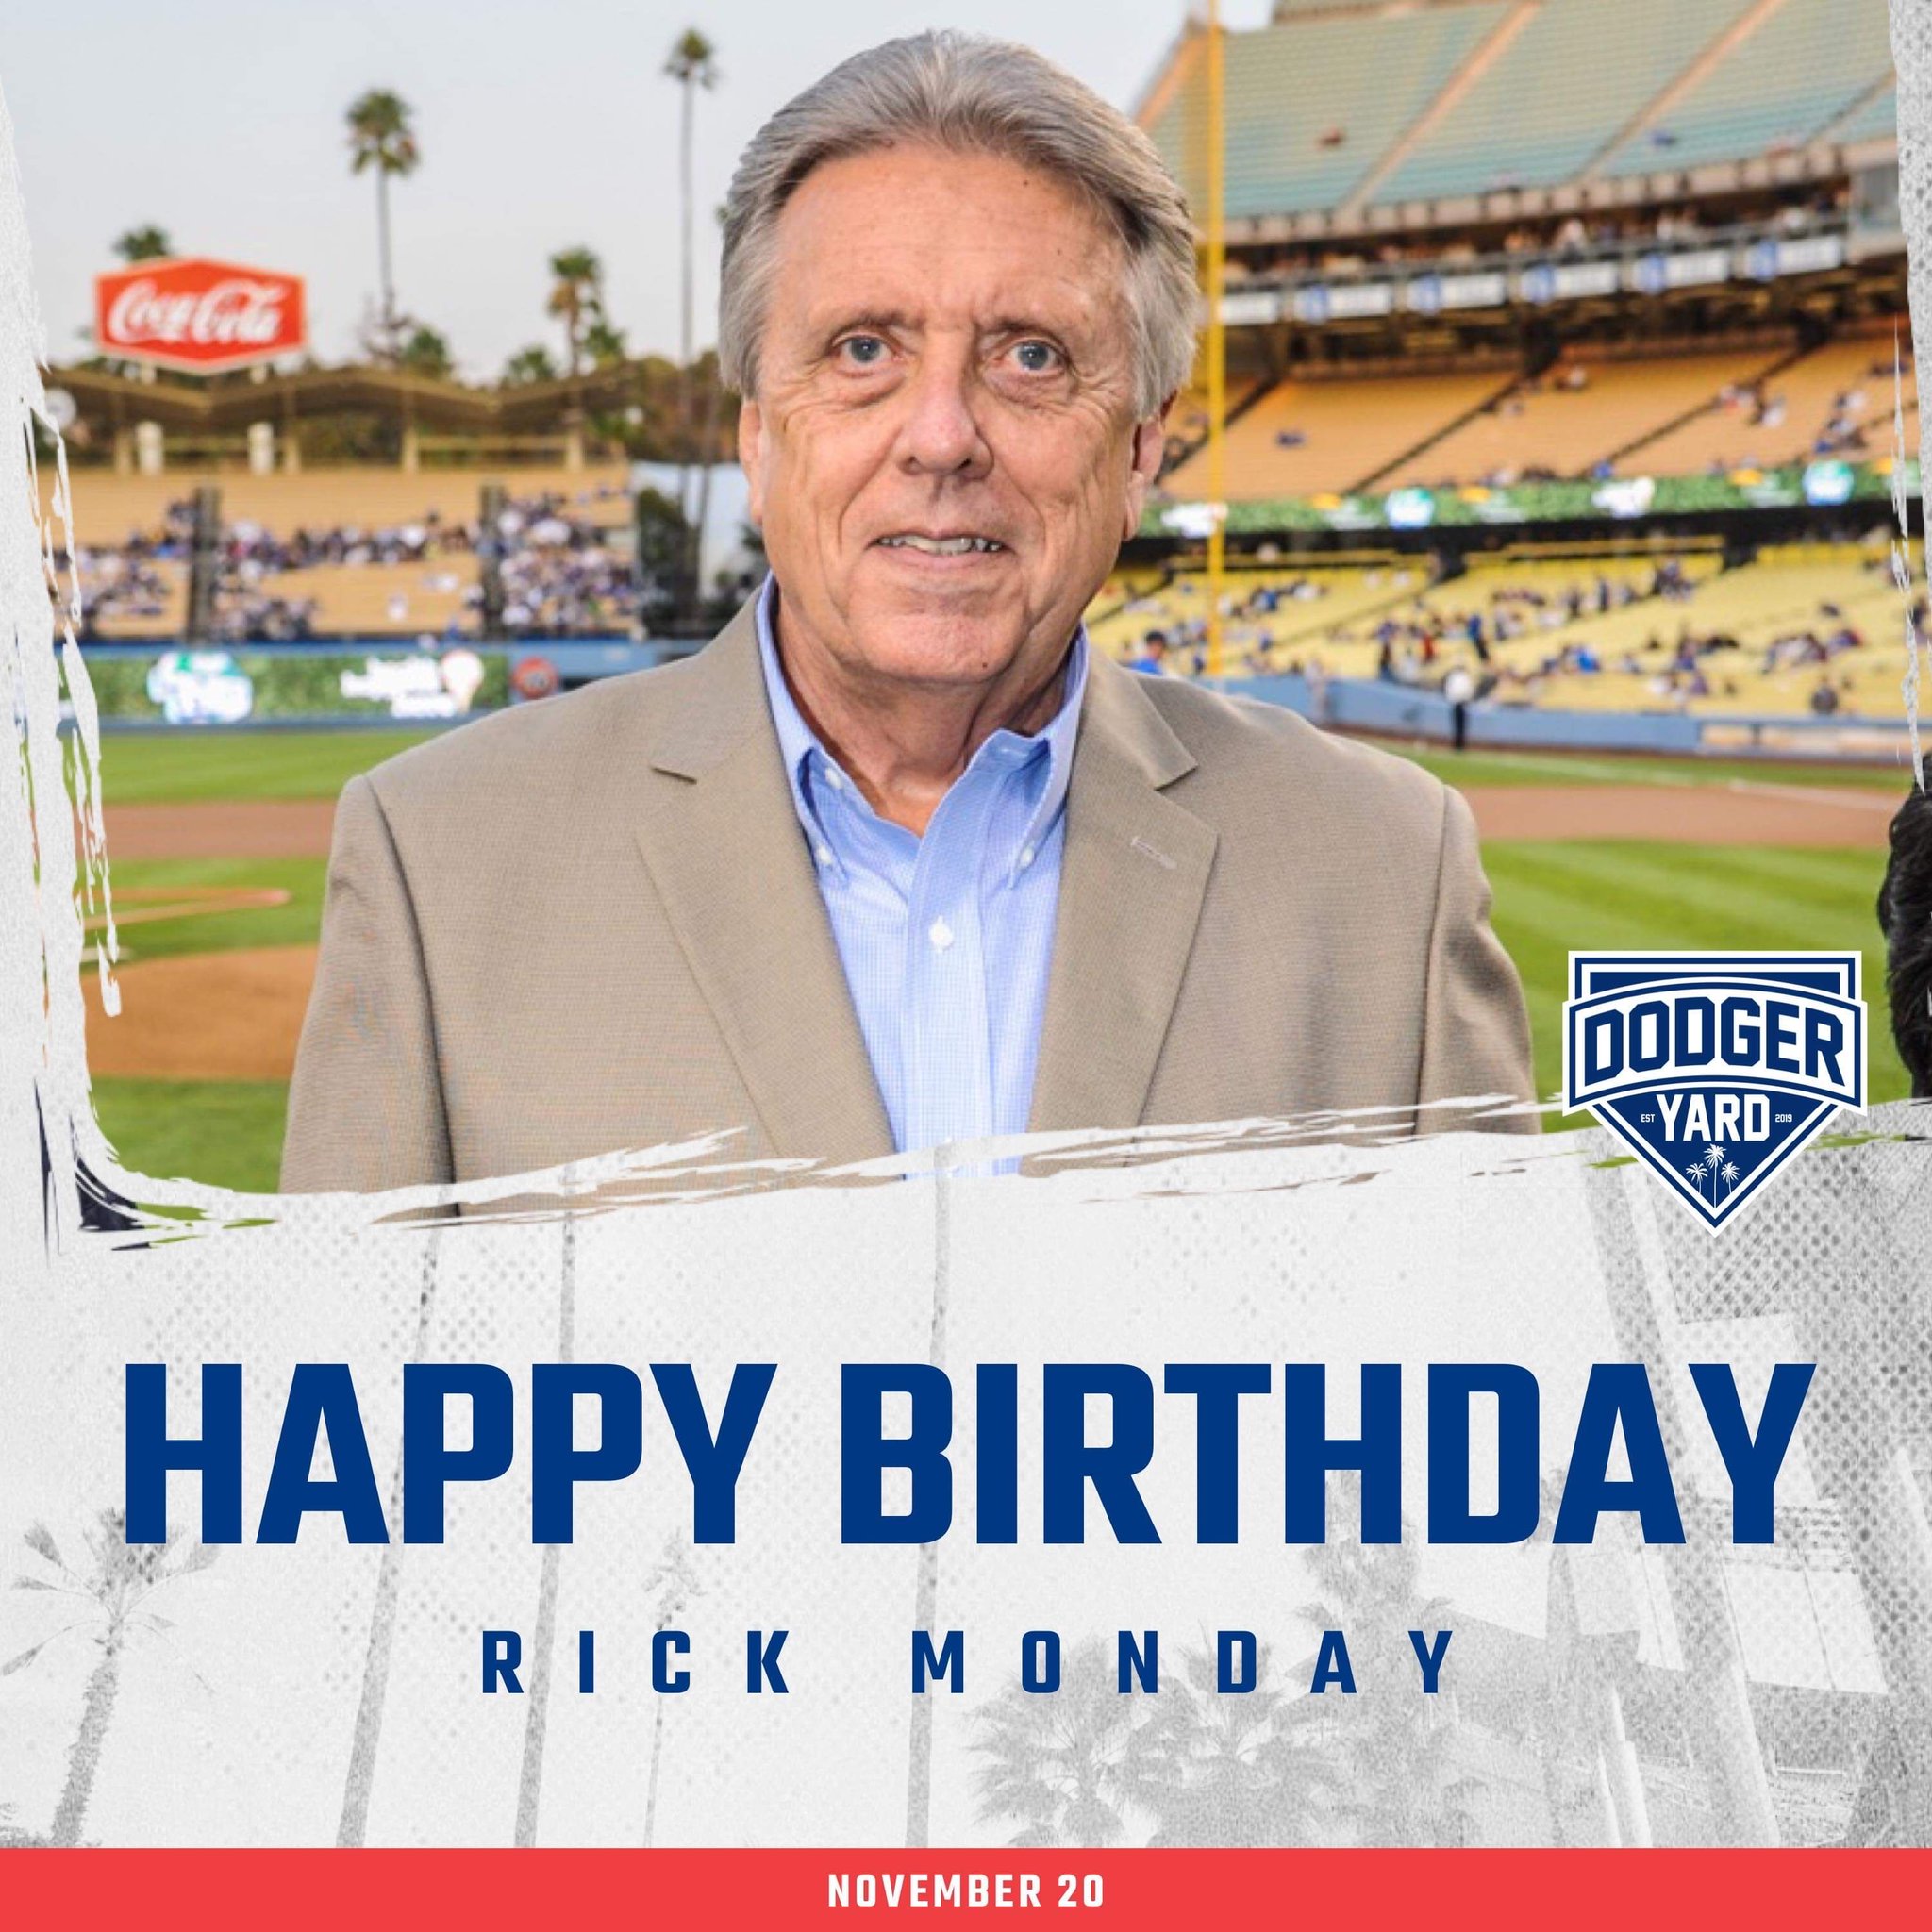 Happy birthday, Rick Monday! 